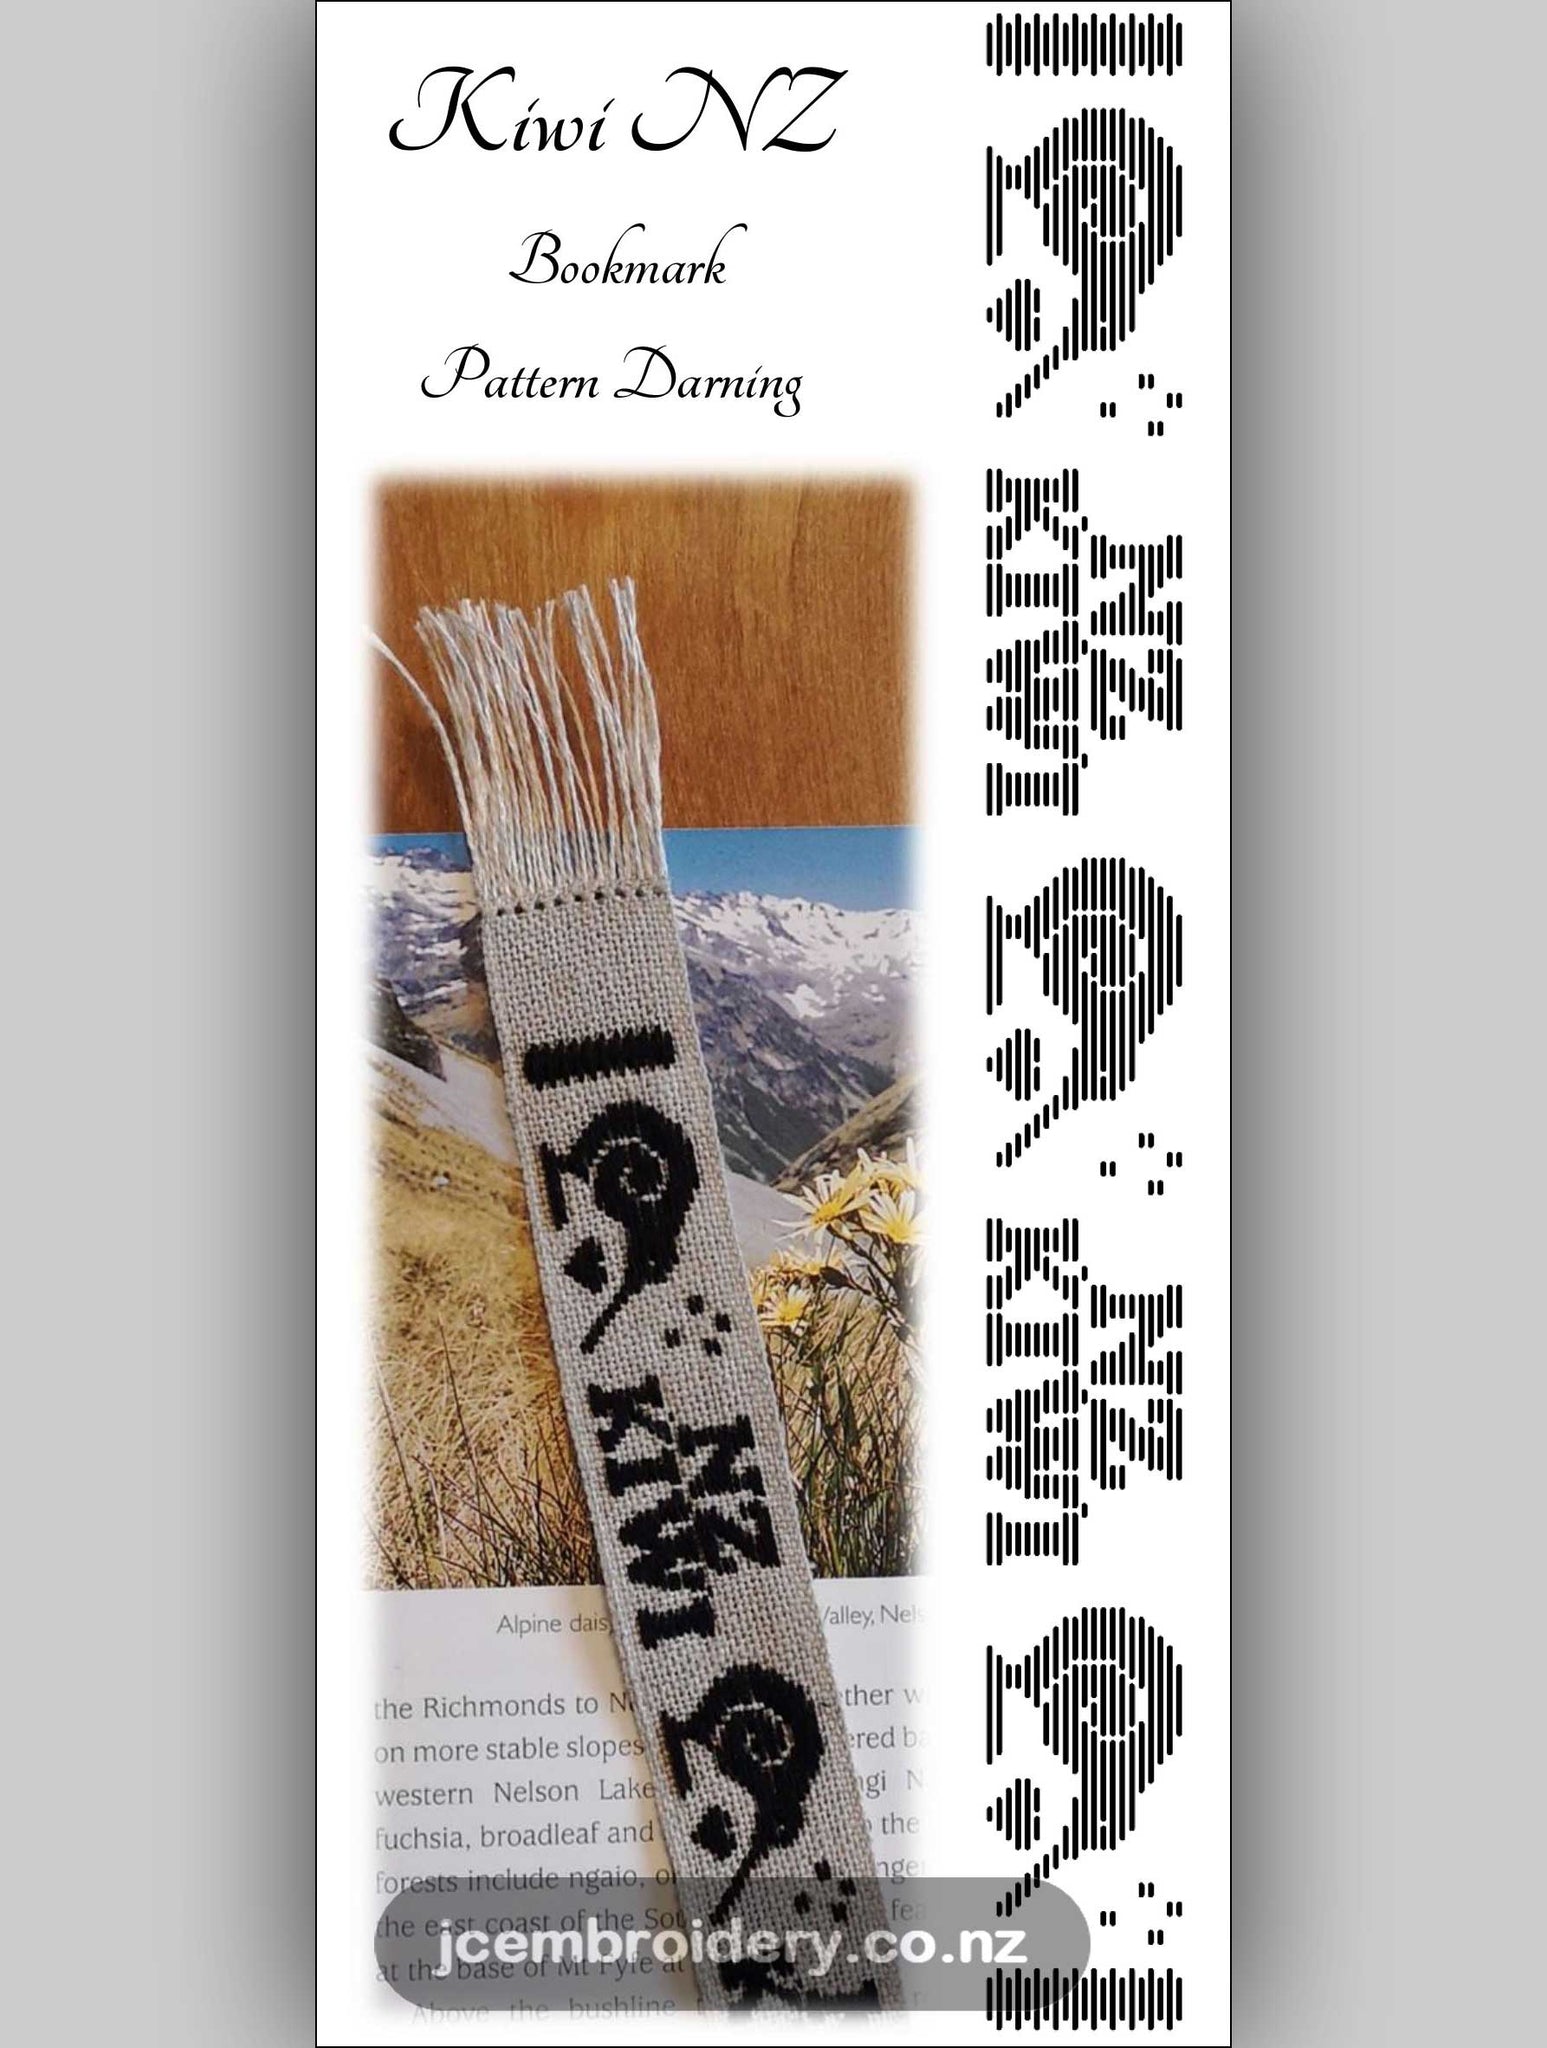 Kiwi NZ Bookmark – Pattern Darning Kit